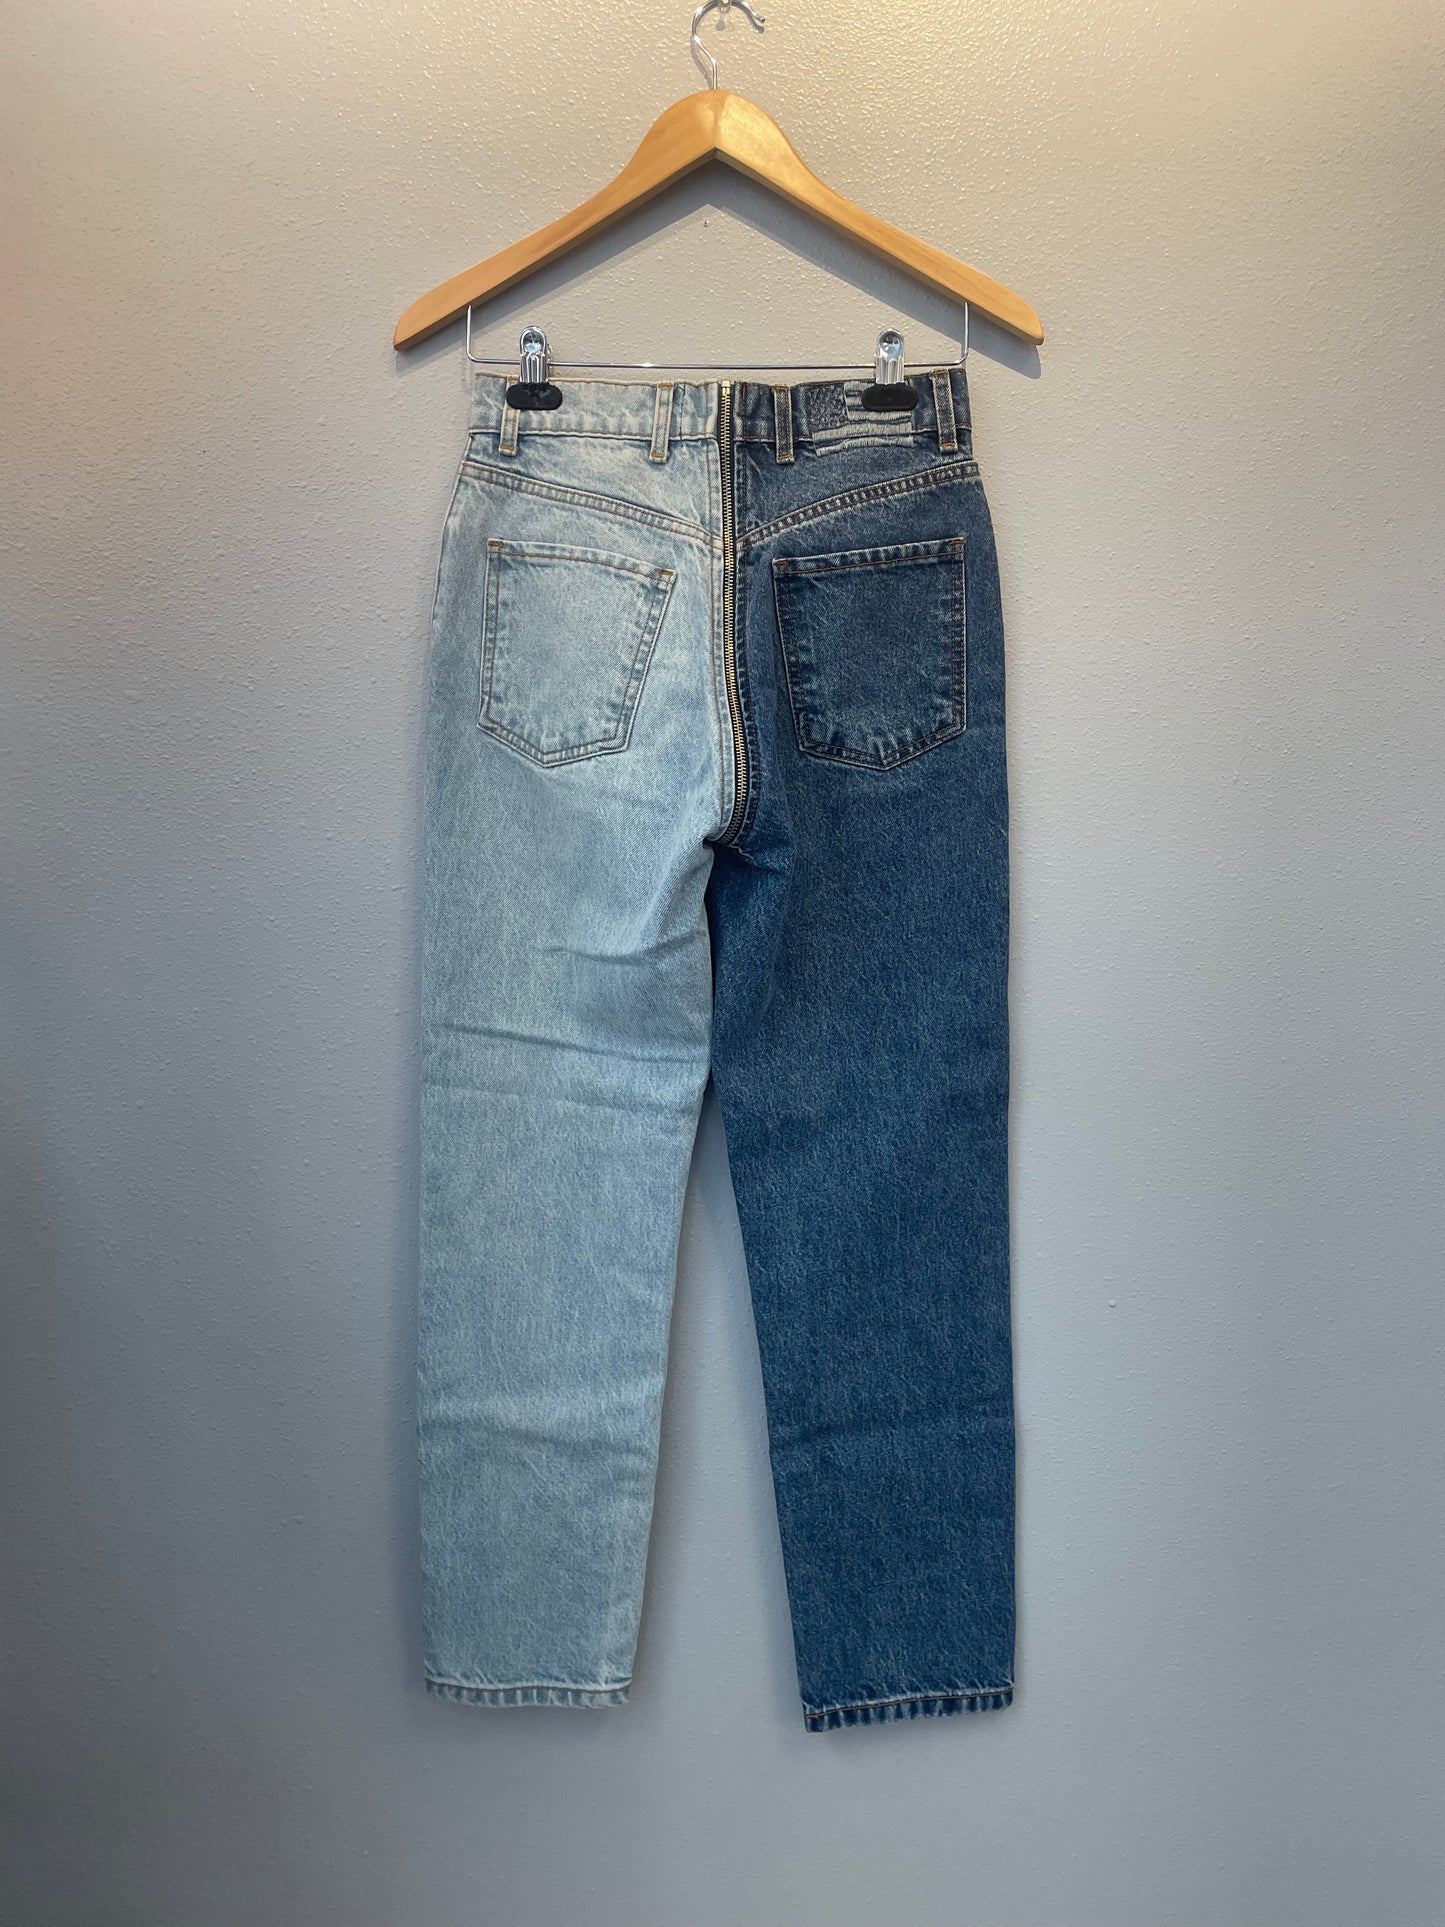 Revice "Yin Yang Crops" Jeans